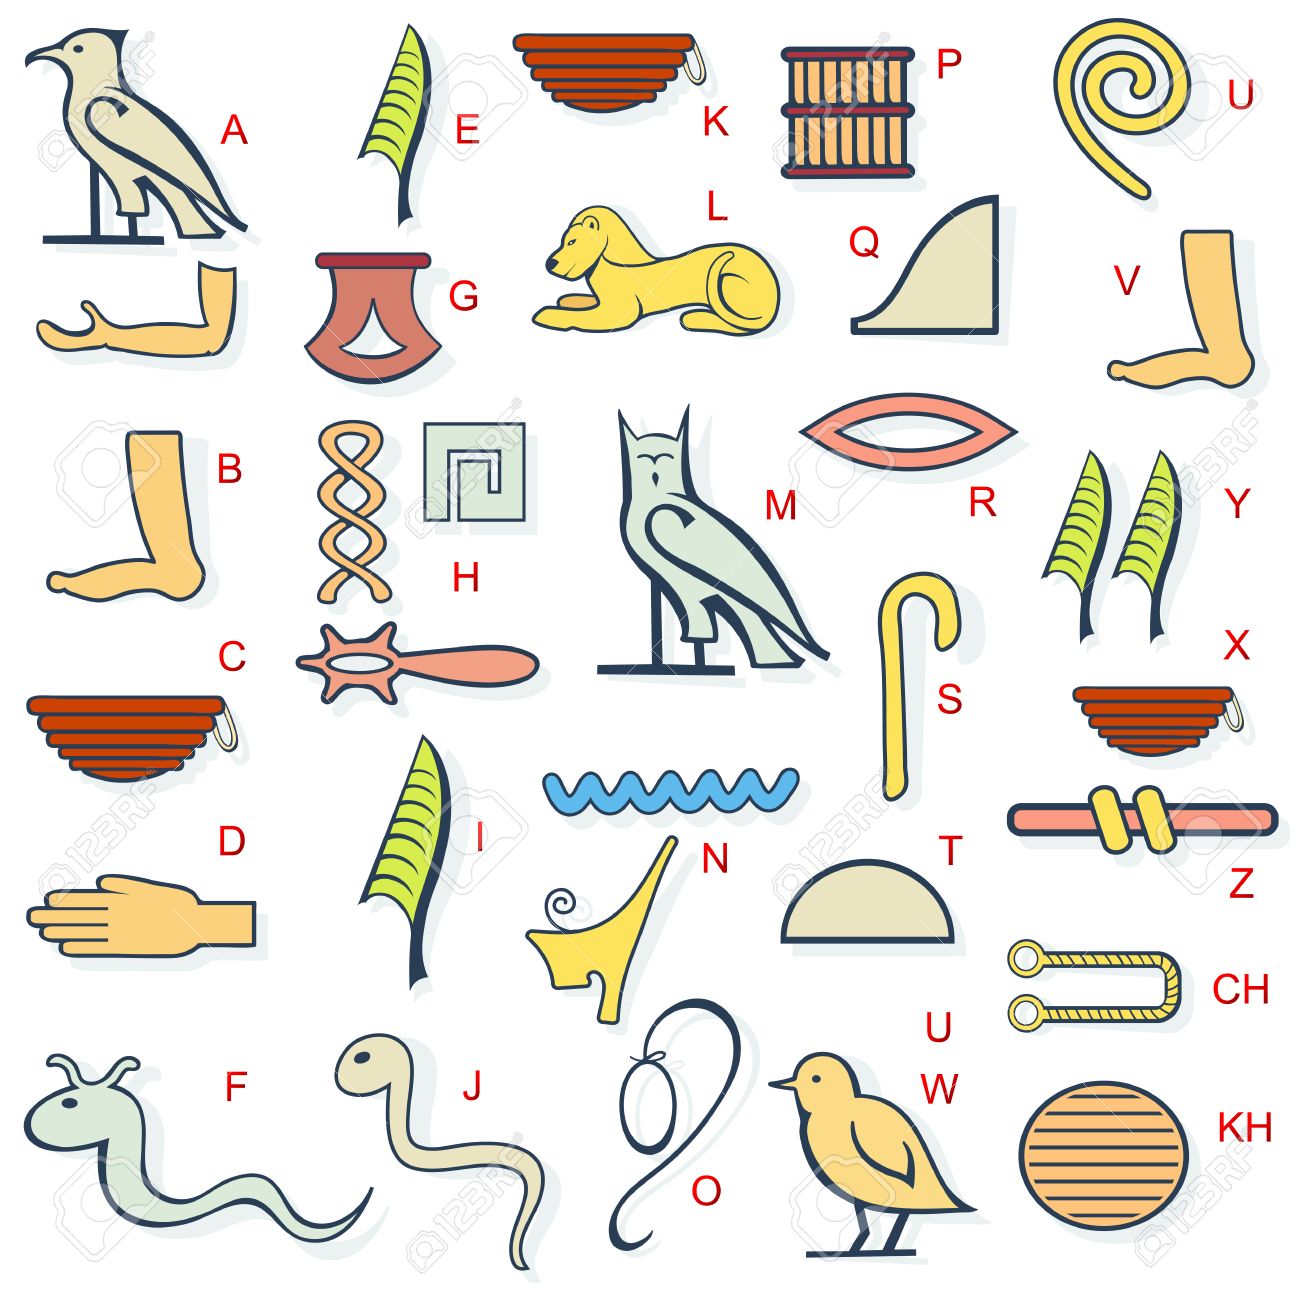 36274440-vector-illustration-for-ancient-egypt-hieroglyphs-alphabet-set.jpg